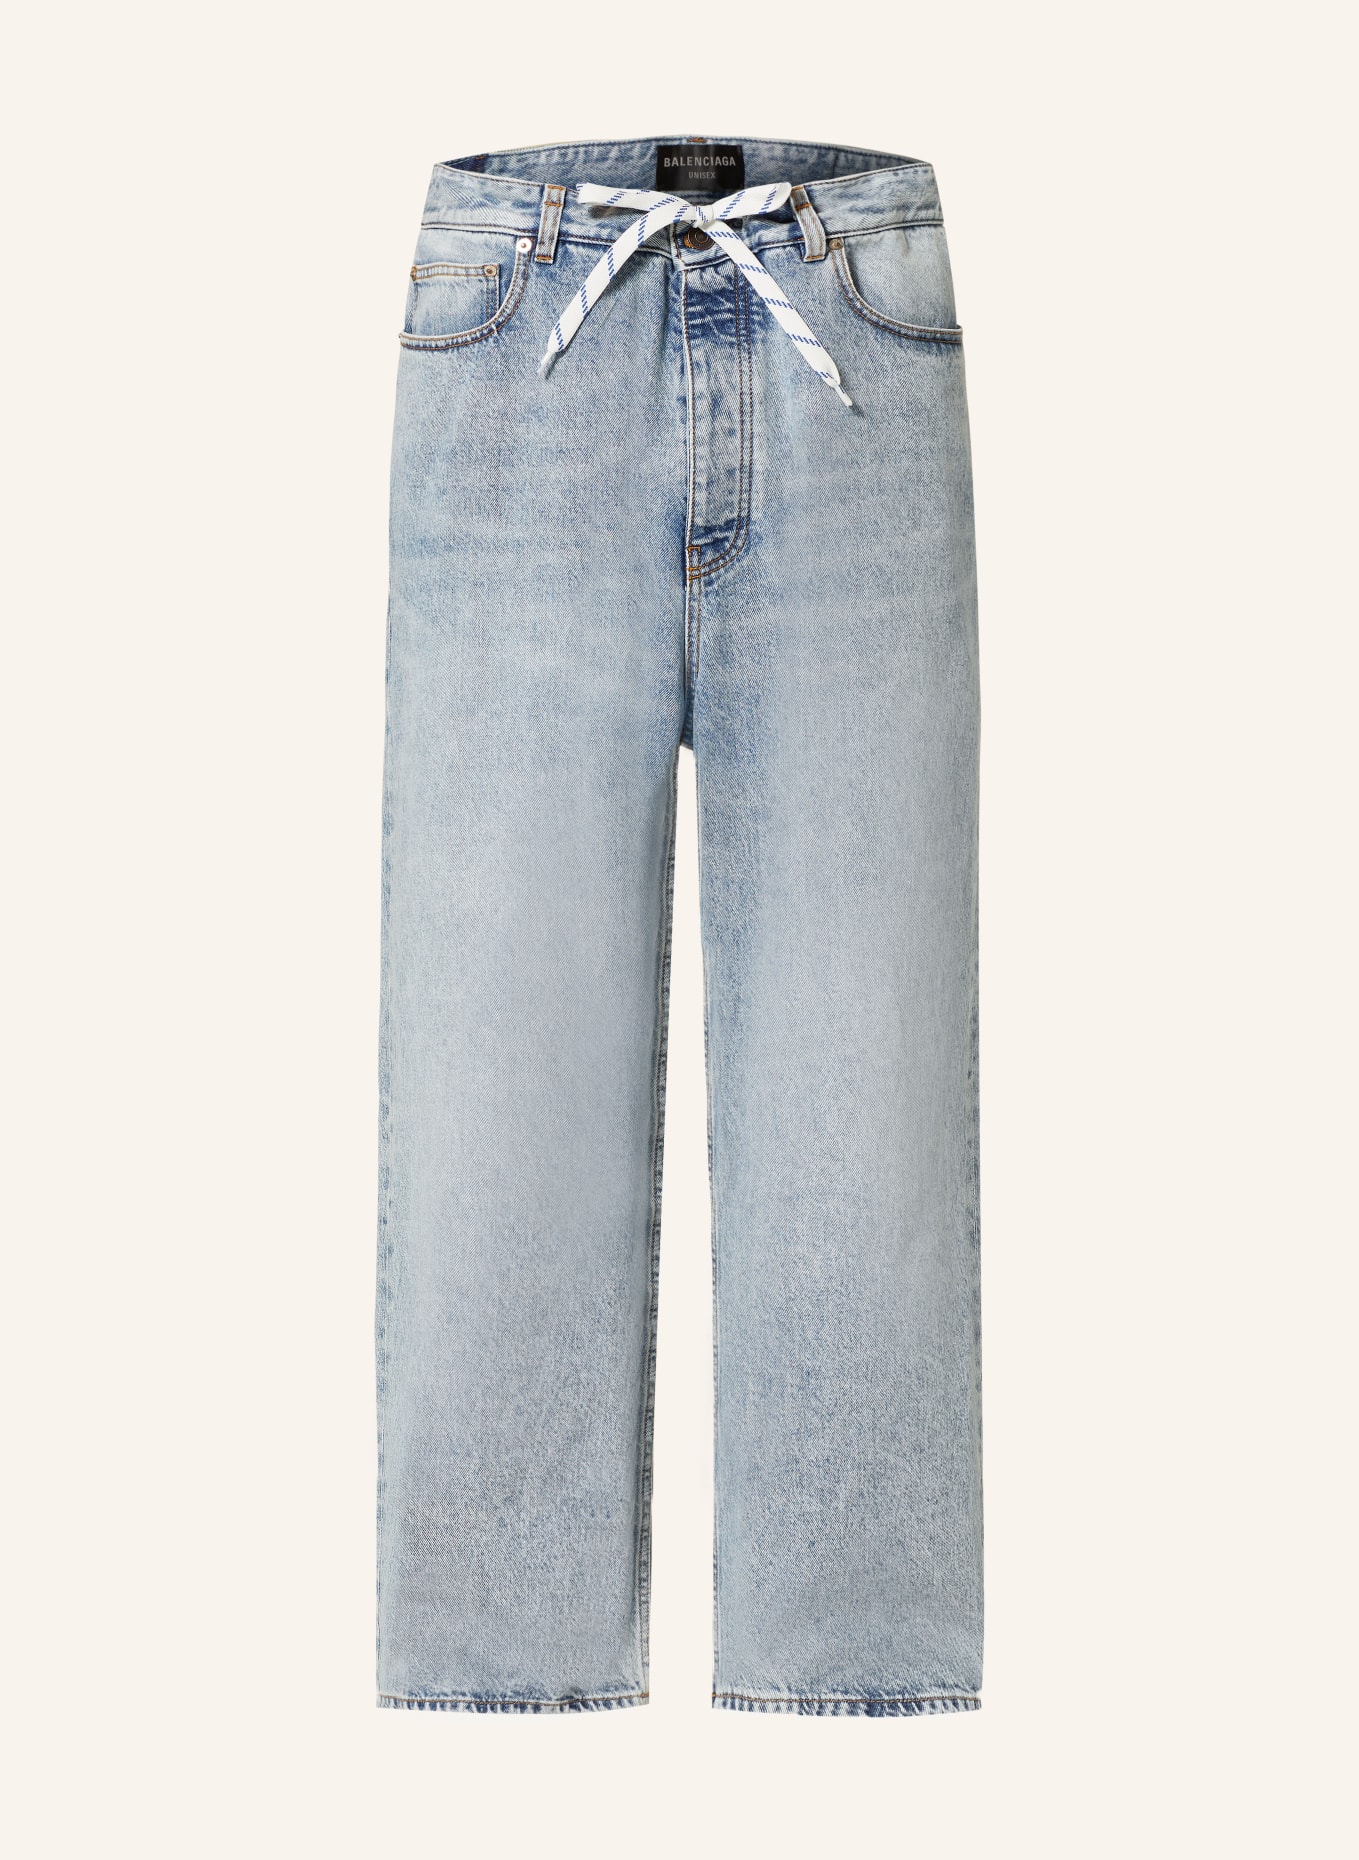 BALENCIAGA Jeans Oversize Fit, Farbe: 4141 ICED BLUE (Bild 1)